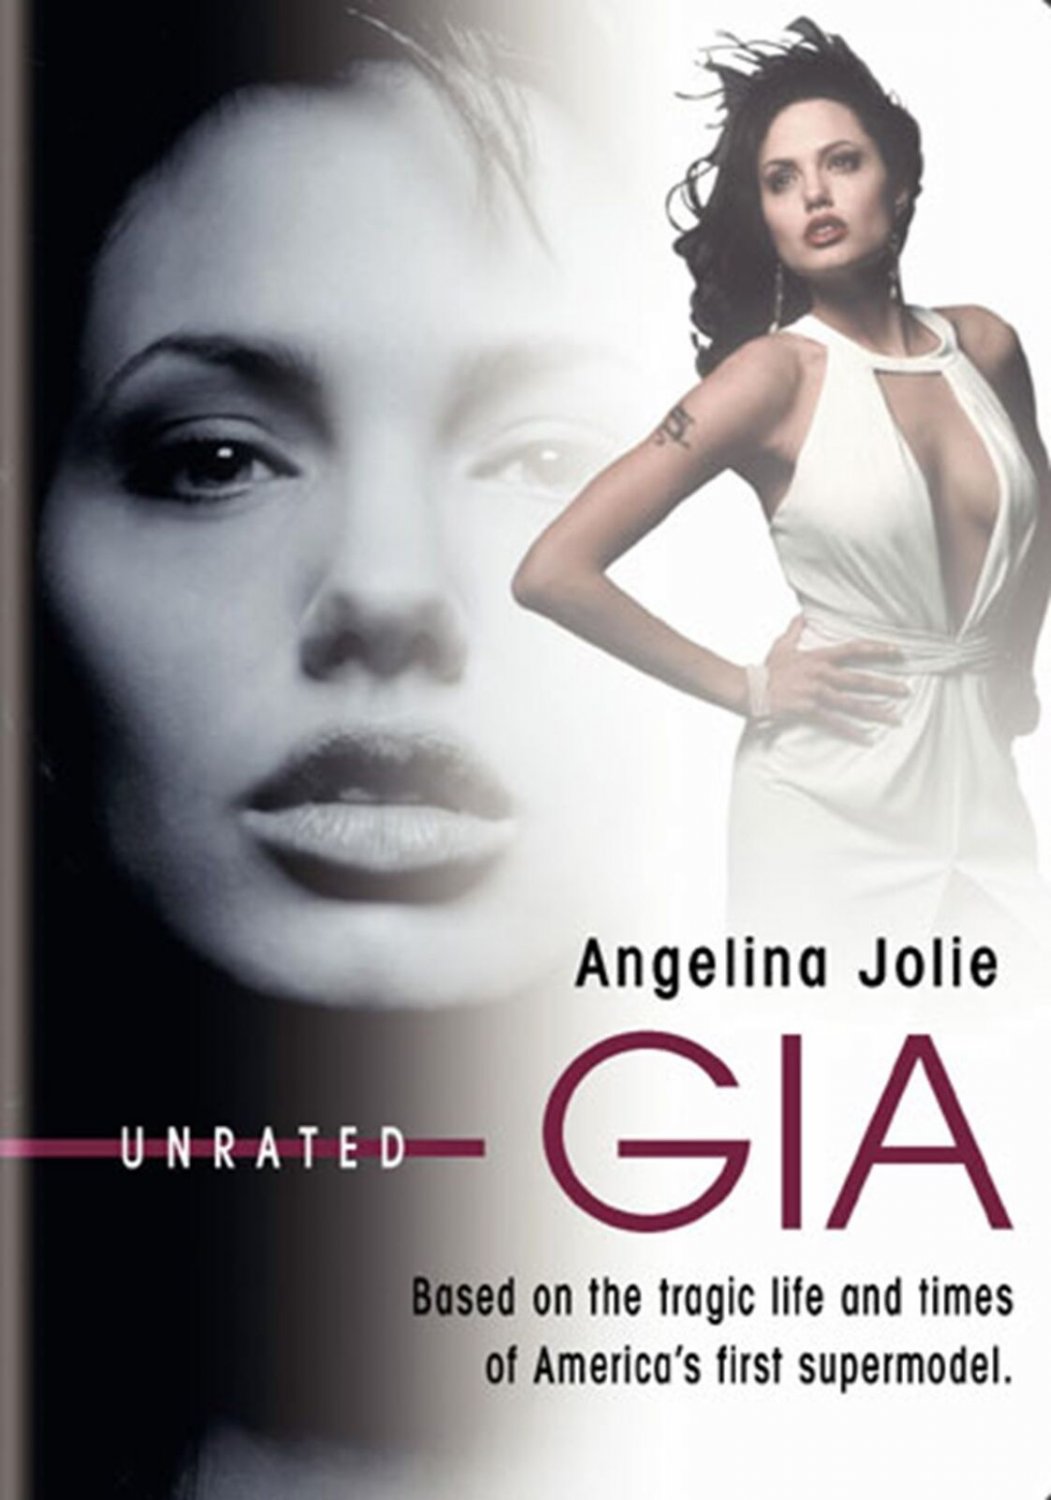 Gia DVD Angelina Jolie NEW